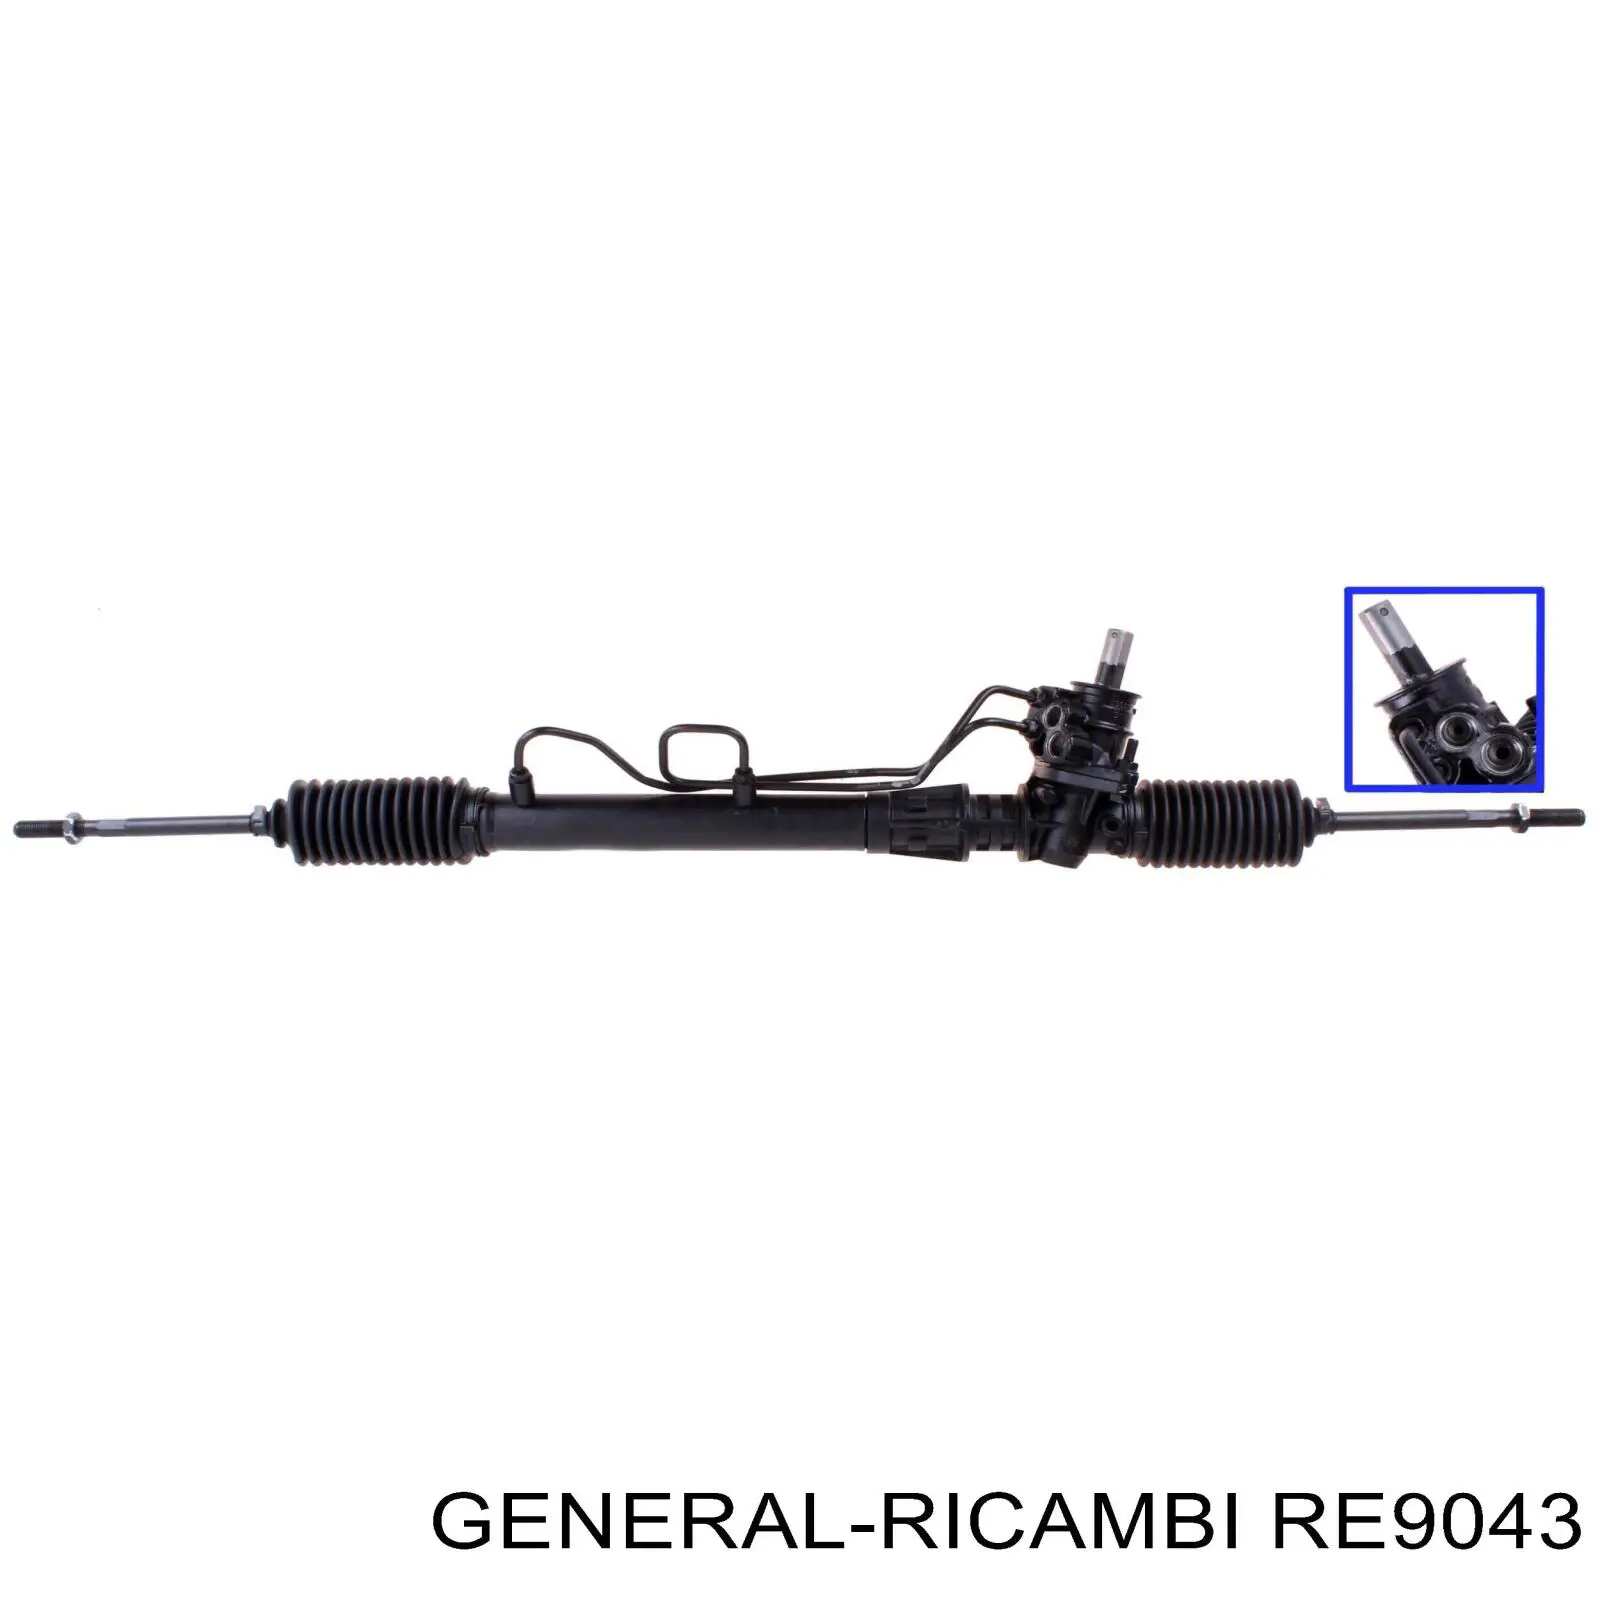 RE9043 General Ricambi рулевая рейка